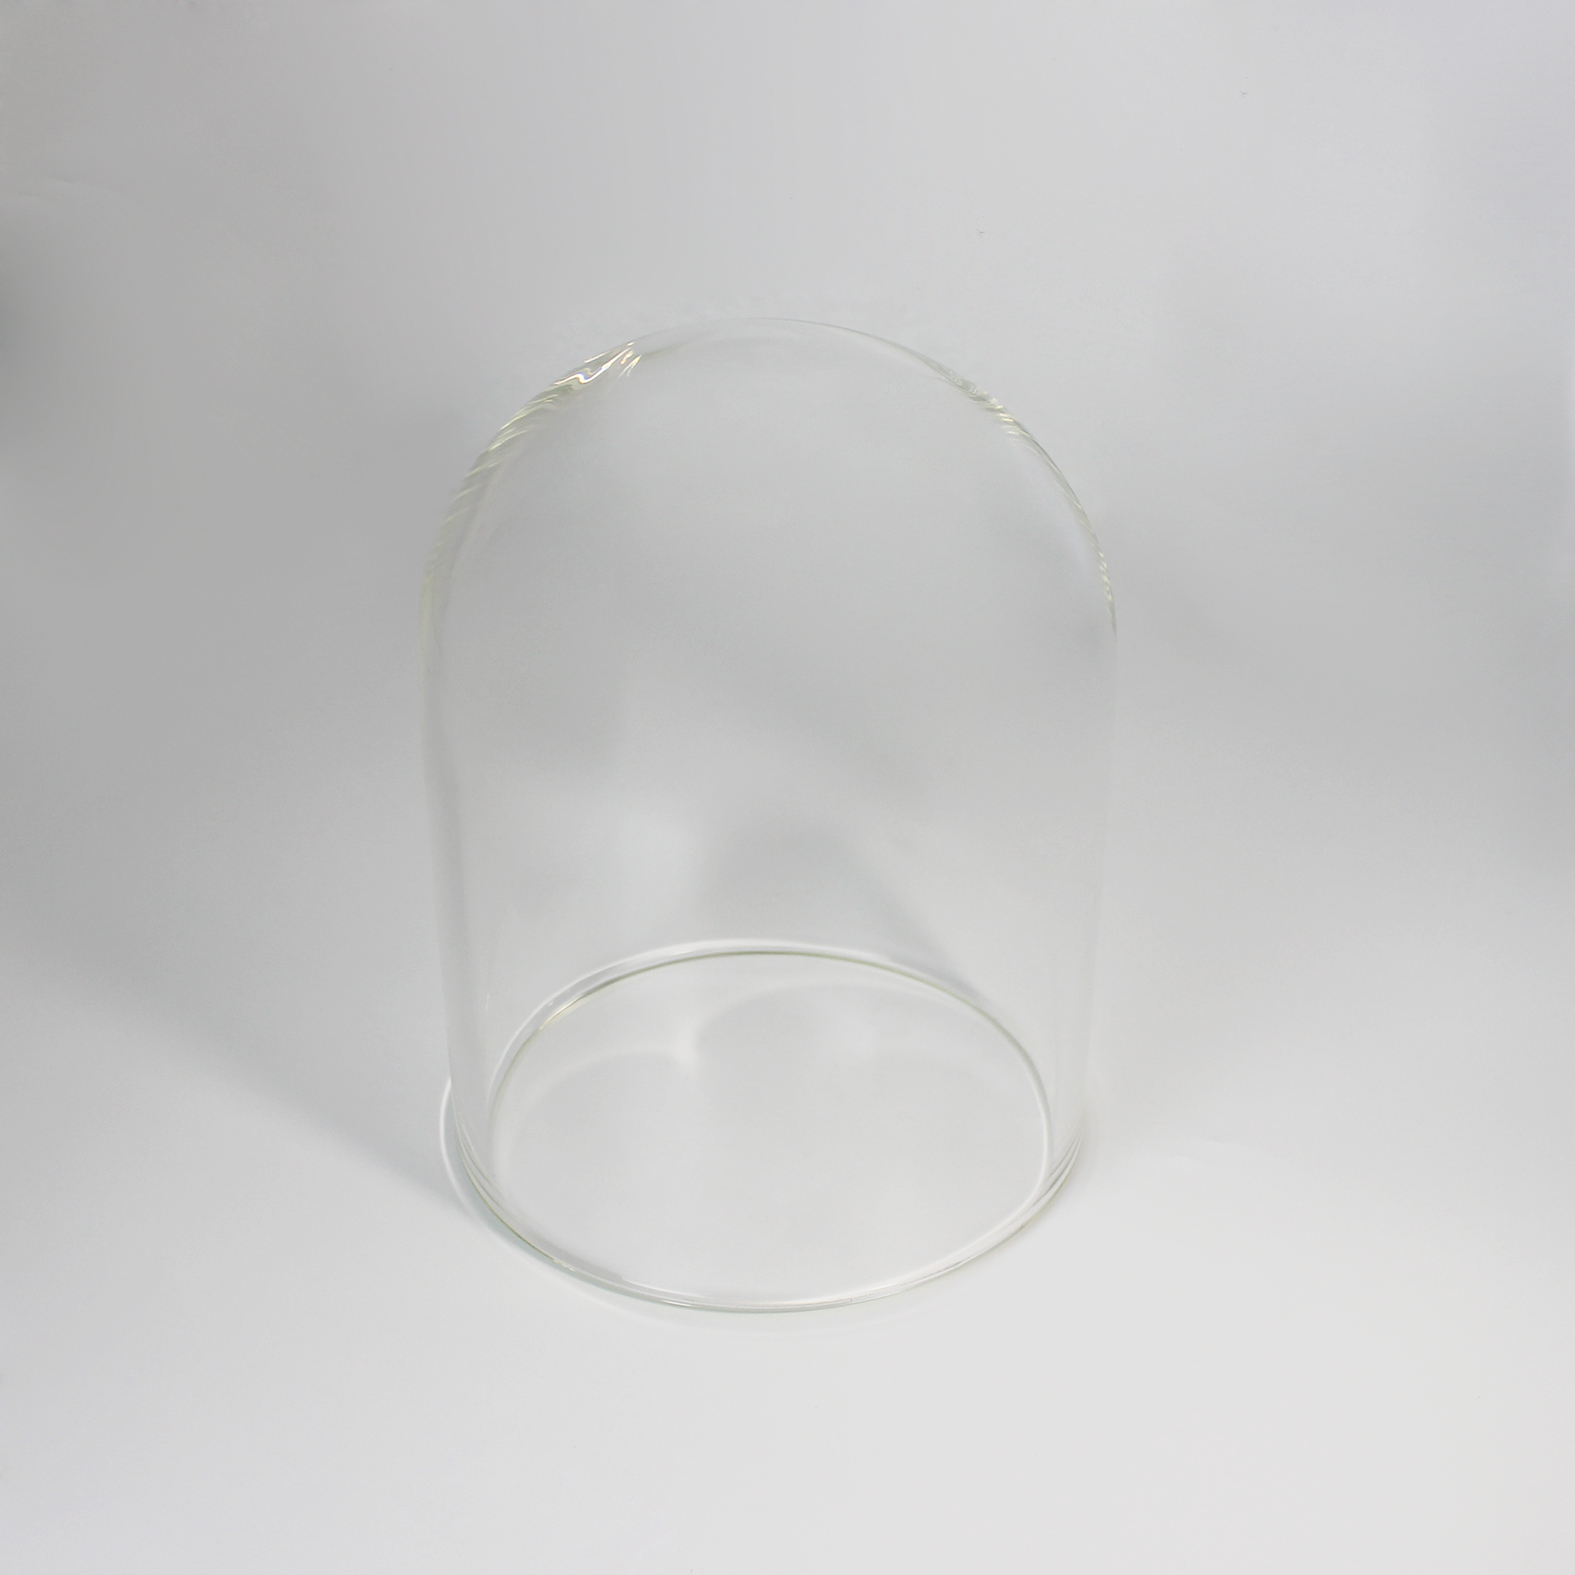 Customized Optical Borosilicate Glass Hyper Hemisphere Dome Port Lens